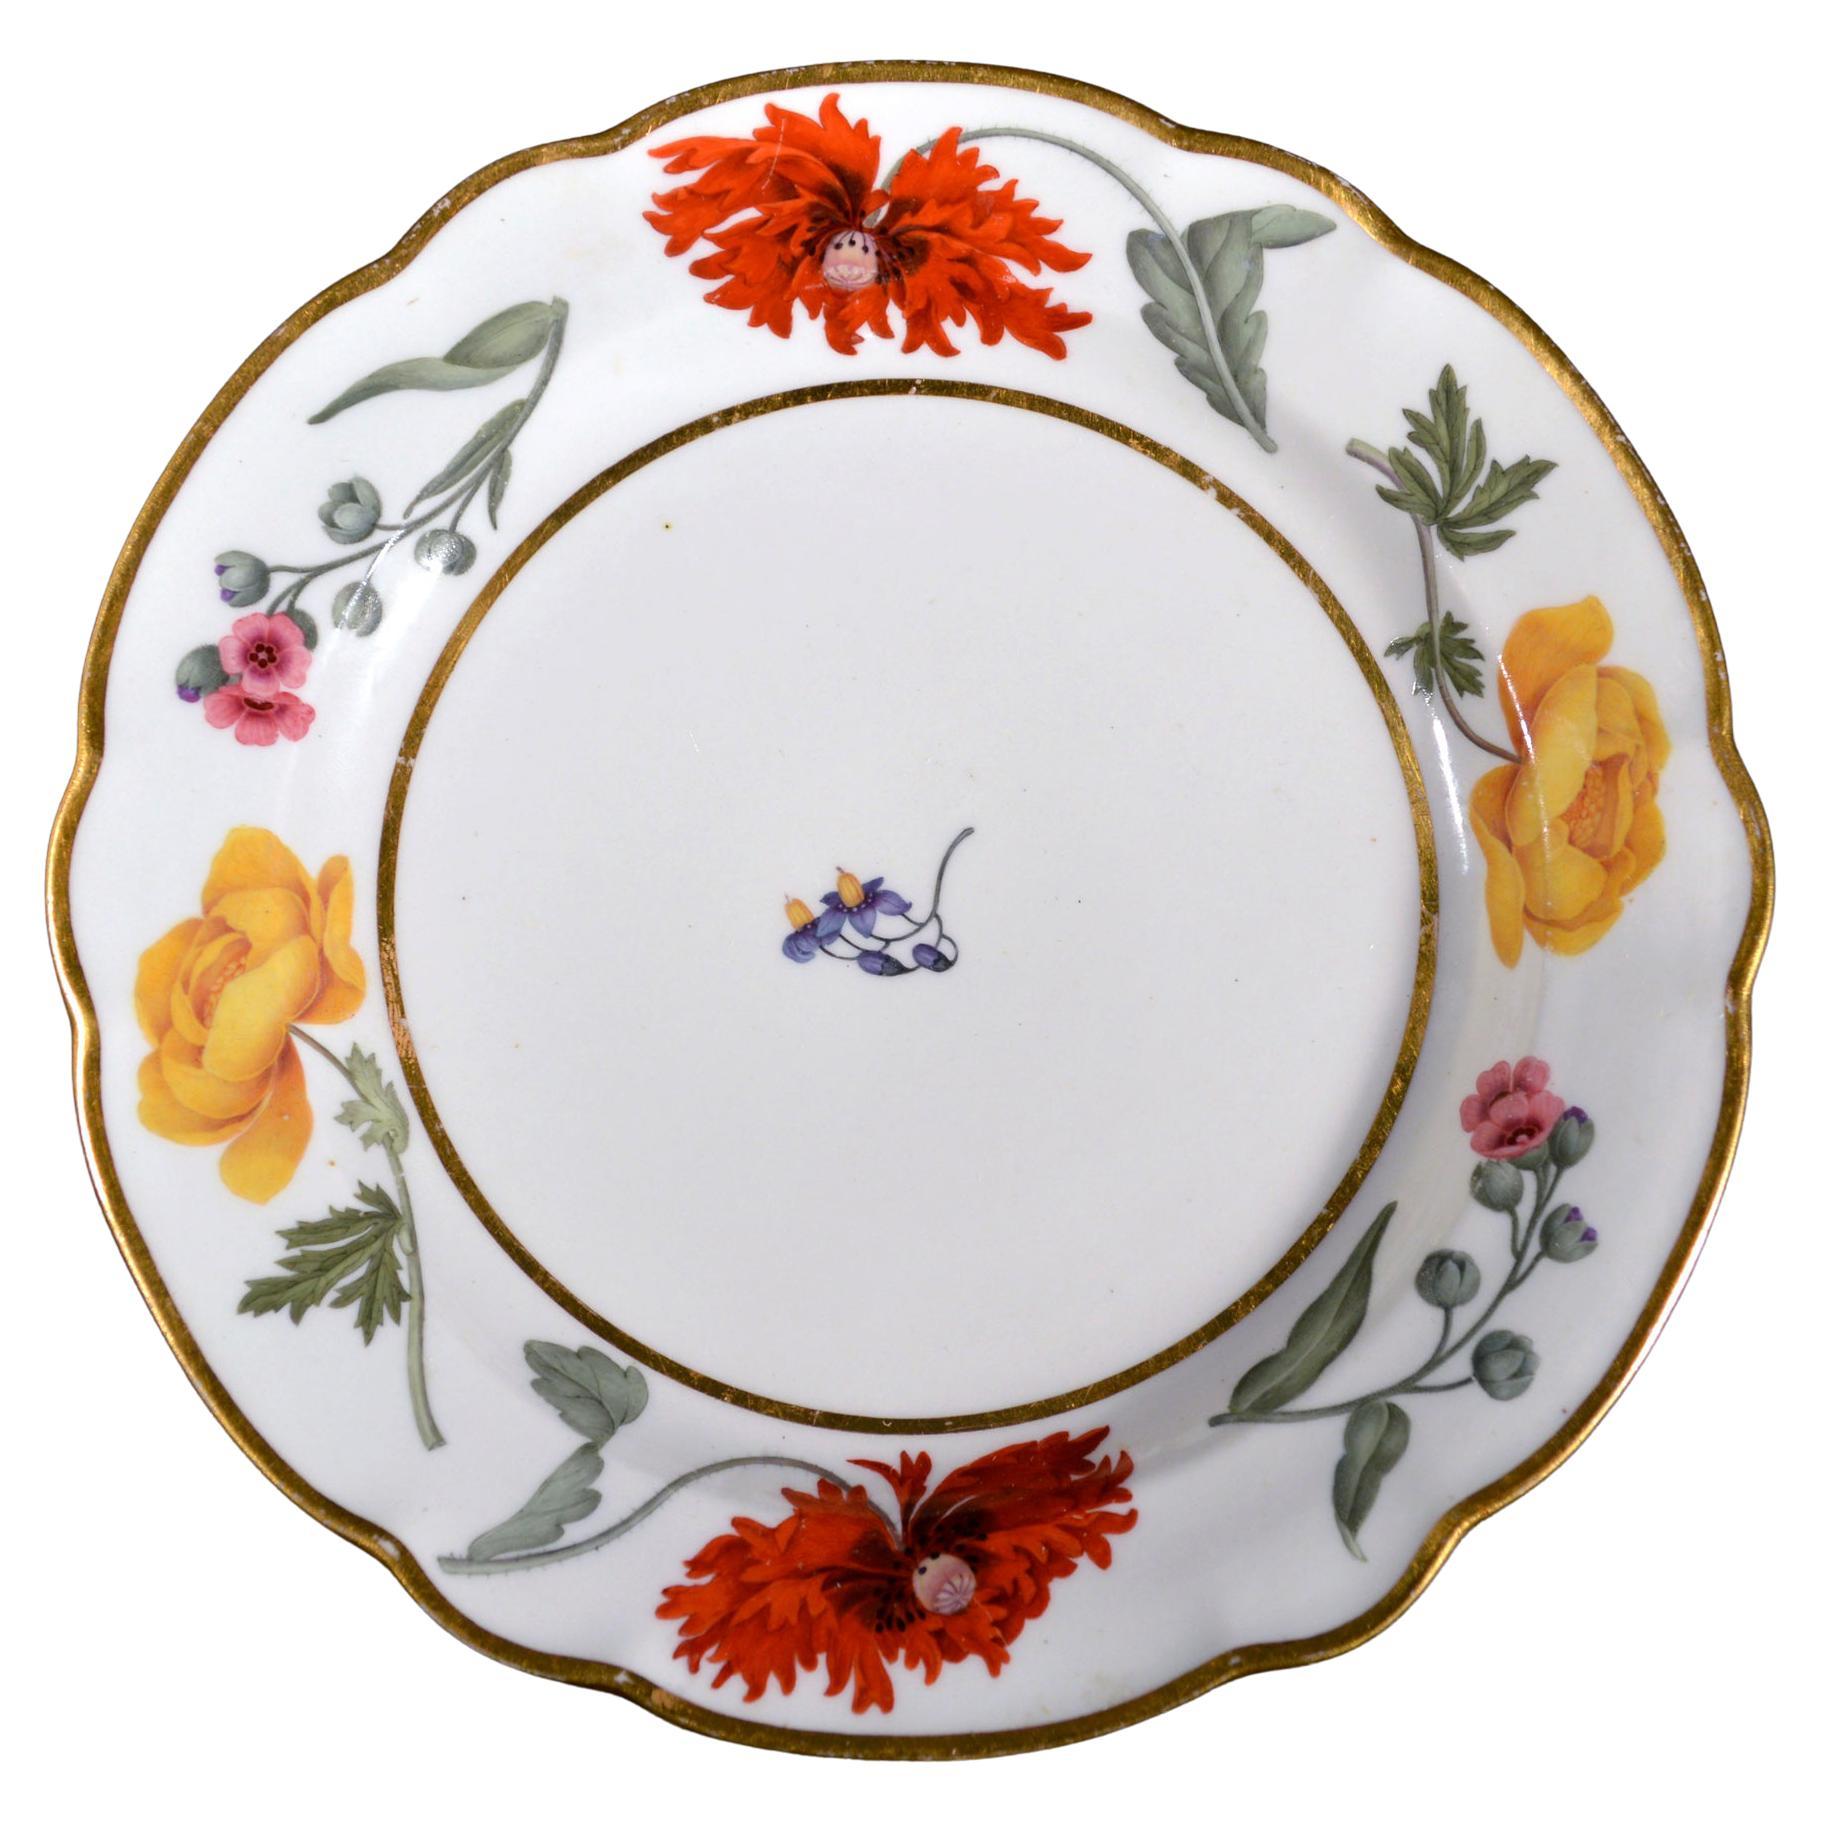 Flight & Barr Worcester Botanical Porcelain Plate, Circa 1792-1800